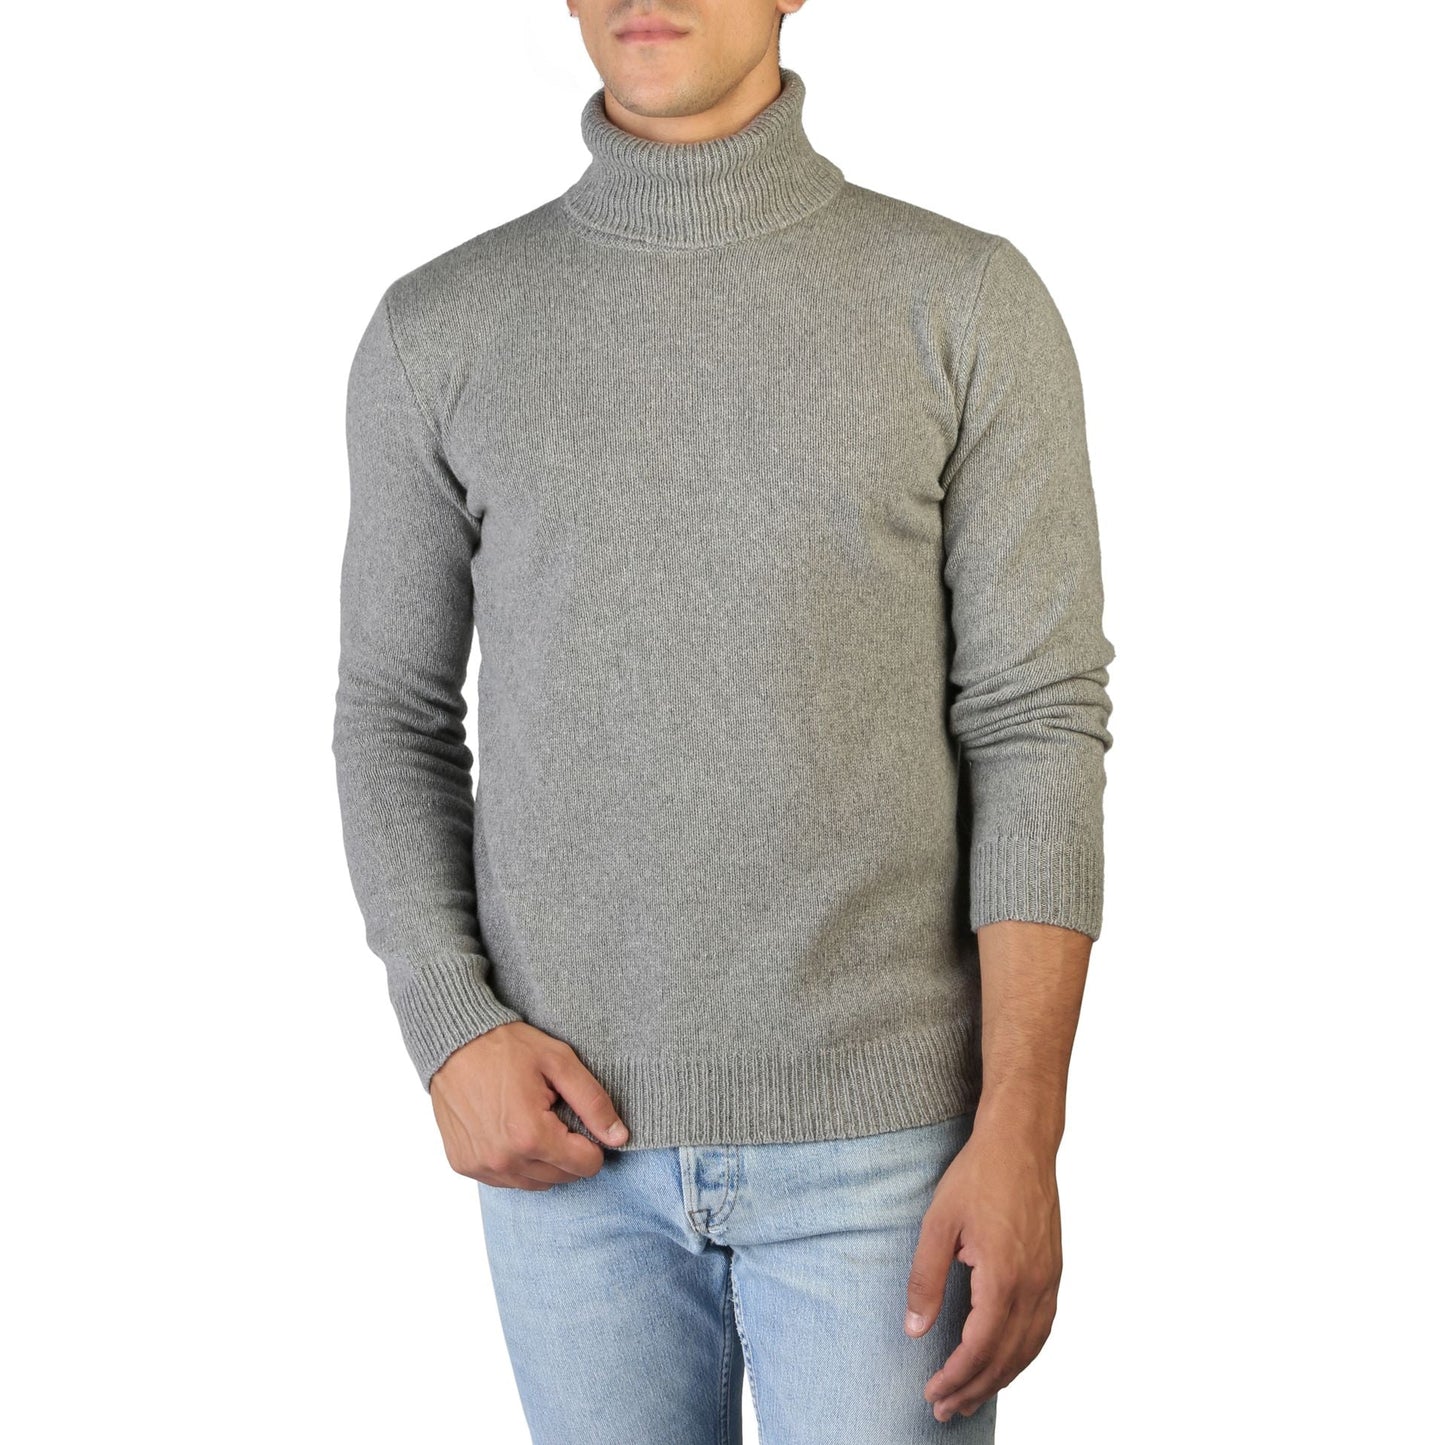 Fashionsarah.com 100% Cashmere Sweaters